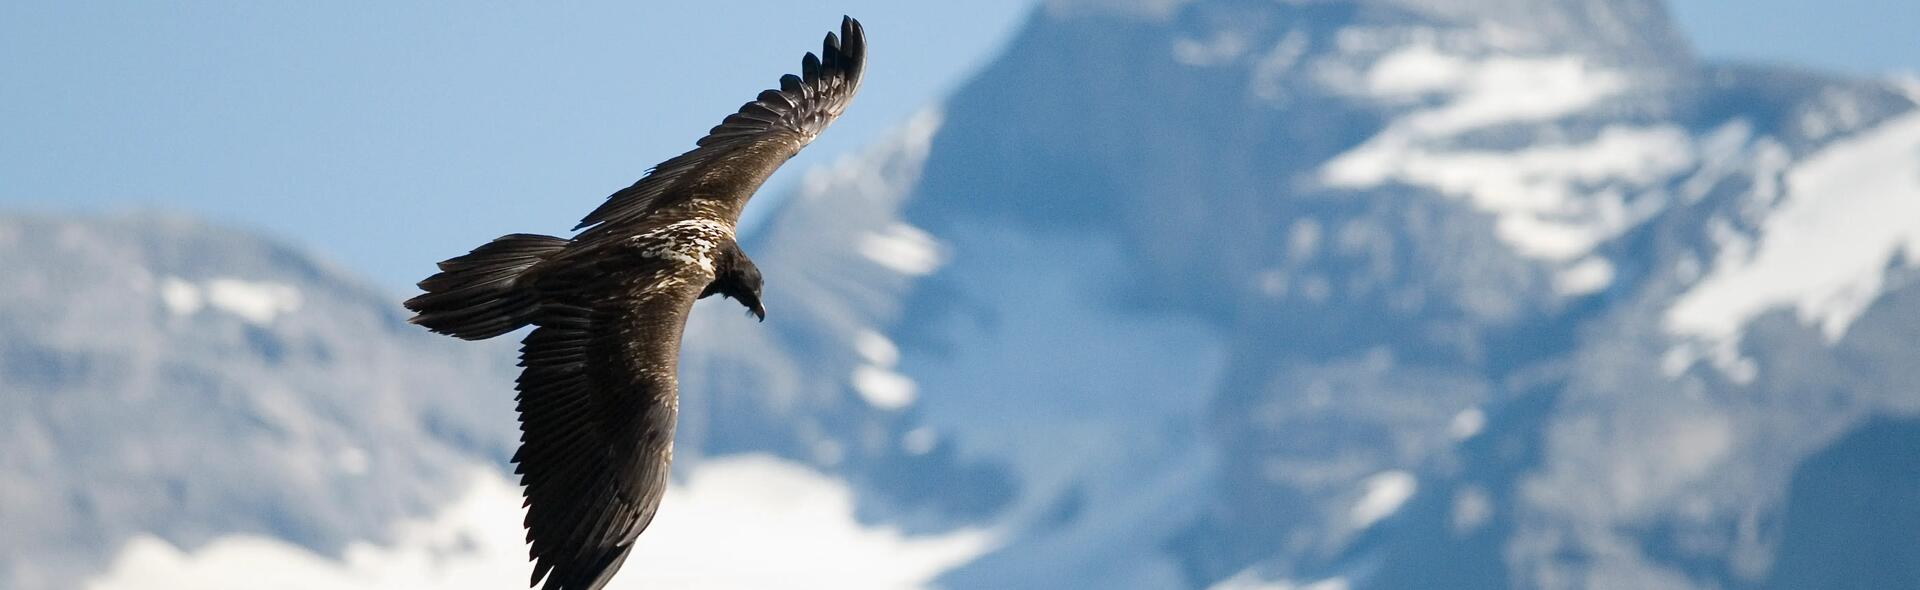 Sunny the Bearded Vulture has taken flight!